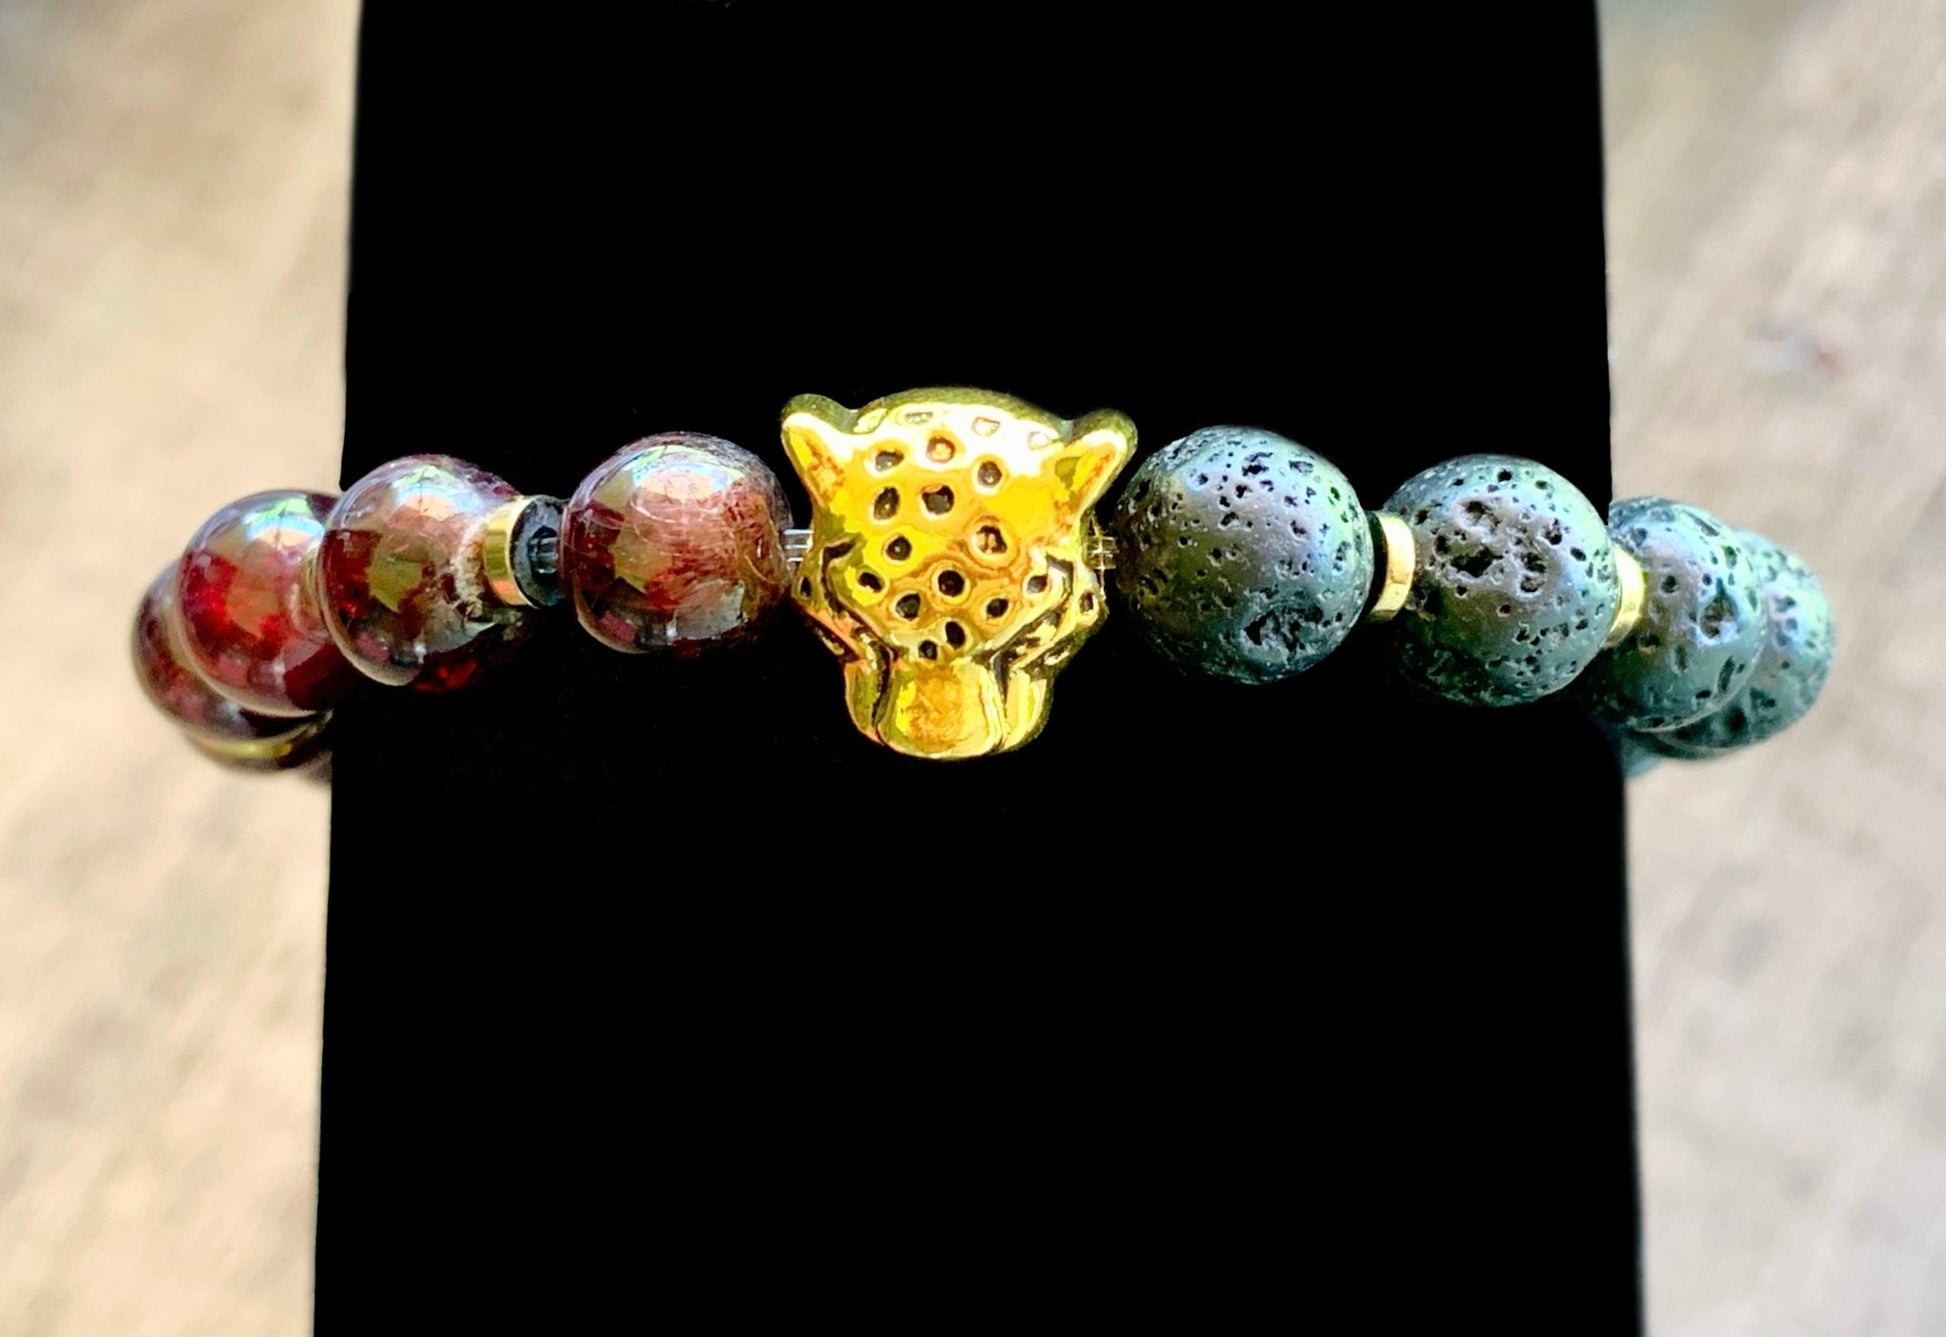 Malcolm Handmade Garnet, Lava Stone, and Hematite Leopard Expandable Bracelet - Born Mystics